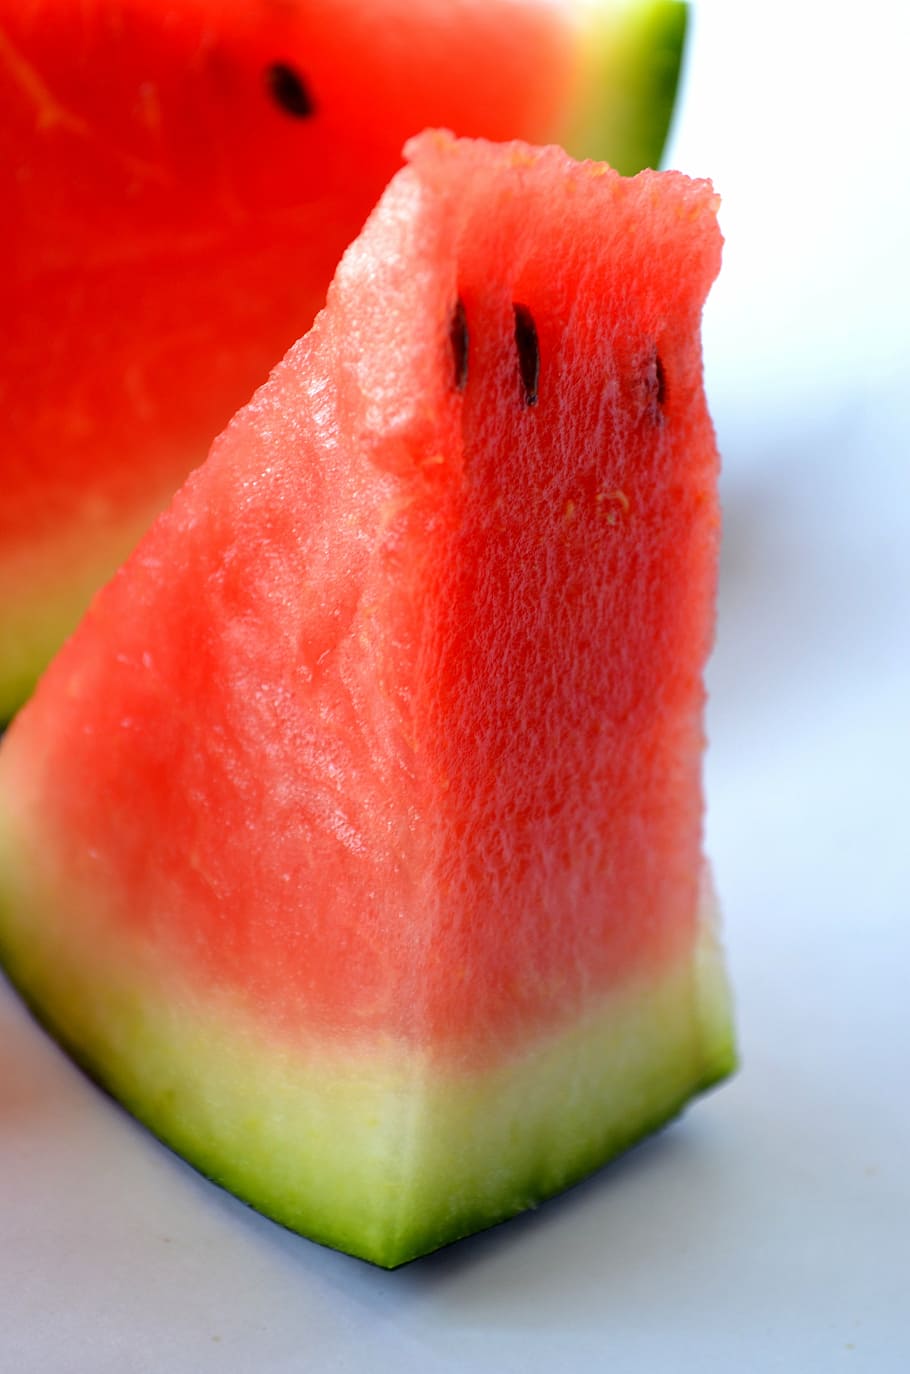 slice of watermelon, watermelon, melon, cut, fruits, sliced, red, fresh, fruit, juicy